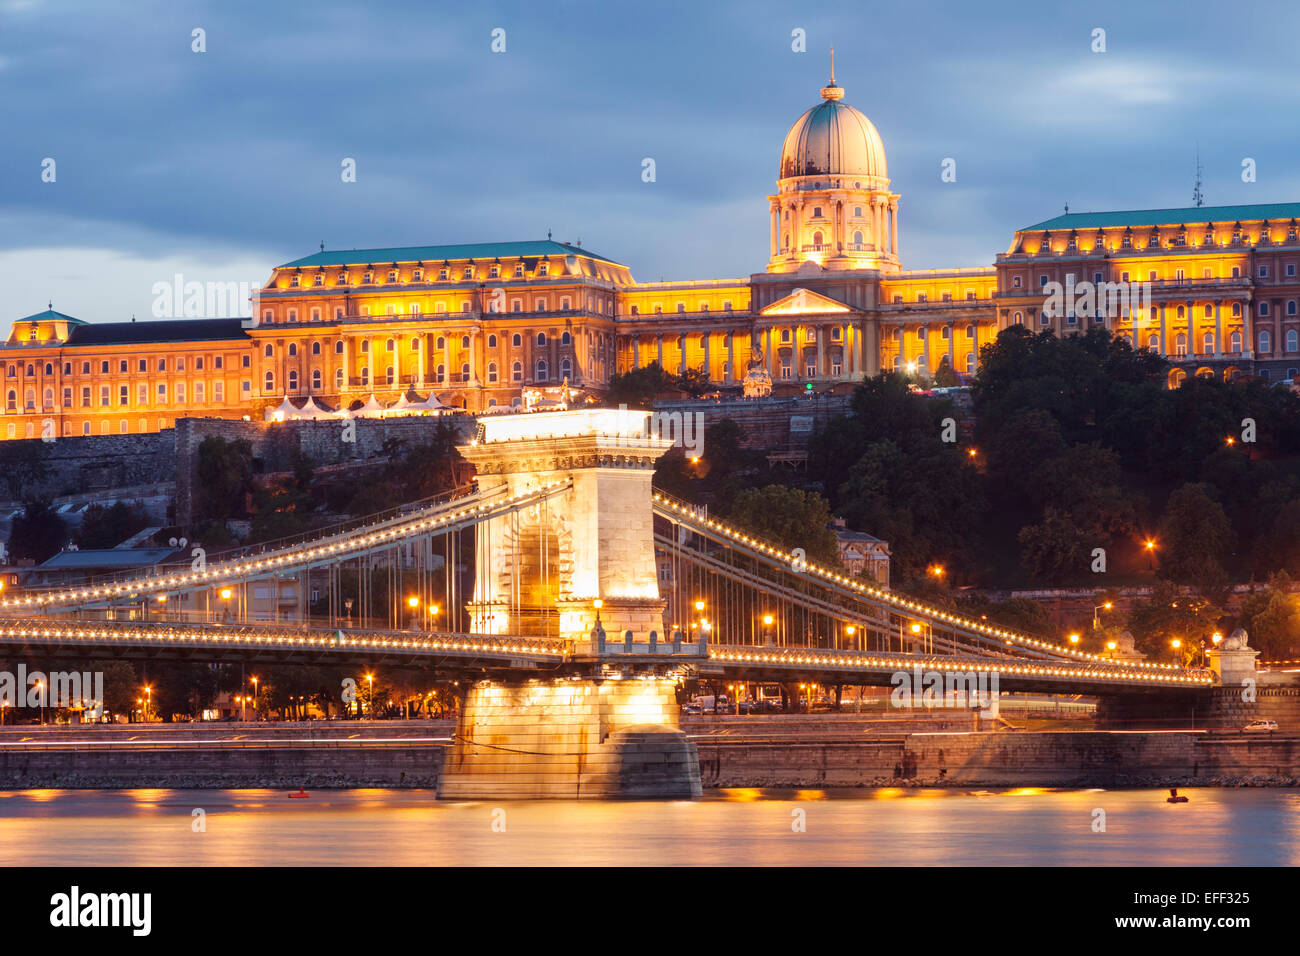 Royal Palace (18th c) and Chain Bridge at night. Budapest, Hungary Stock Photo